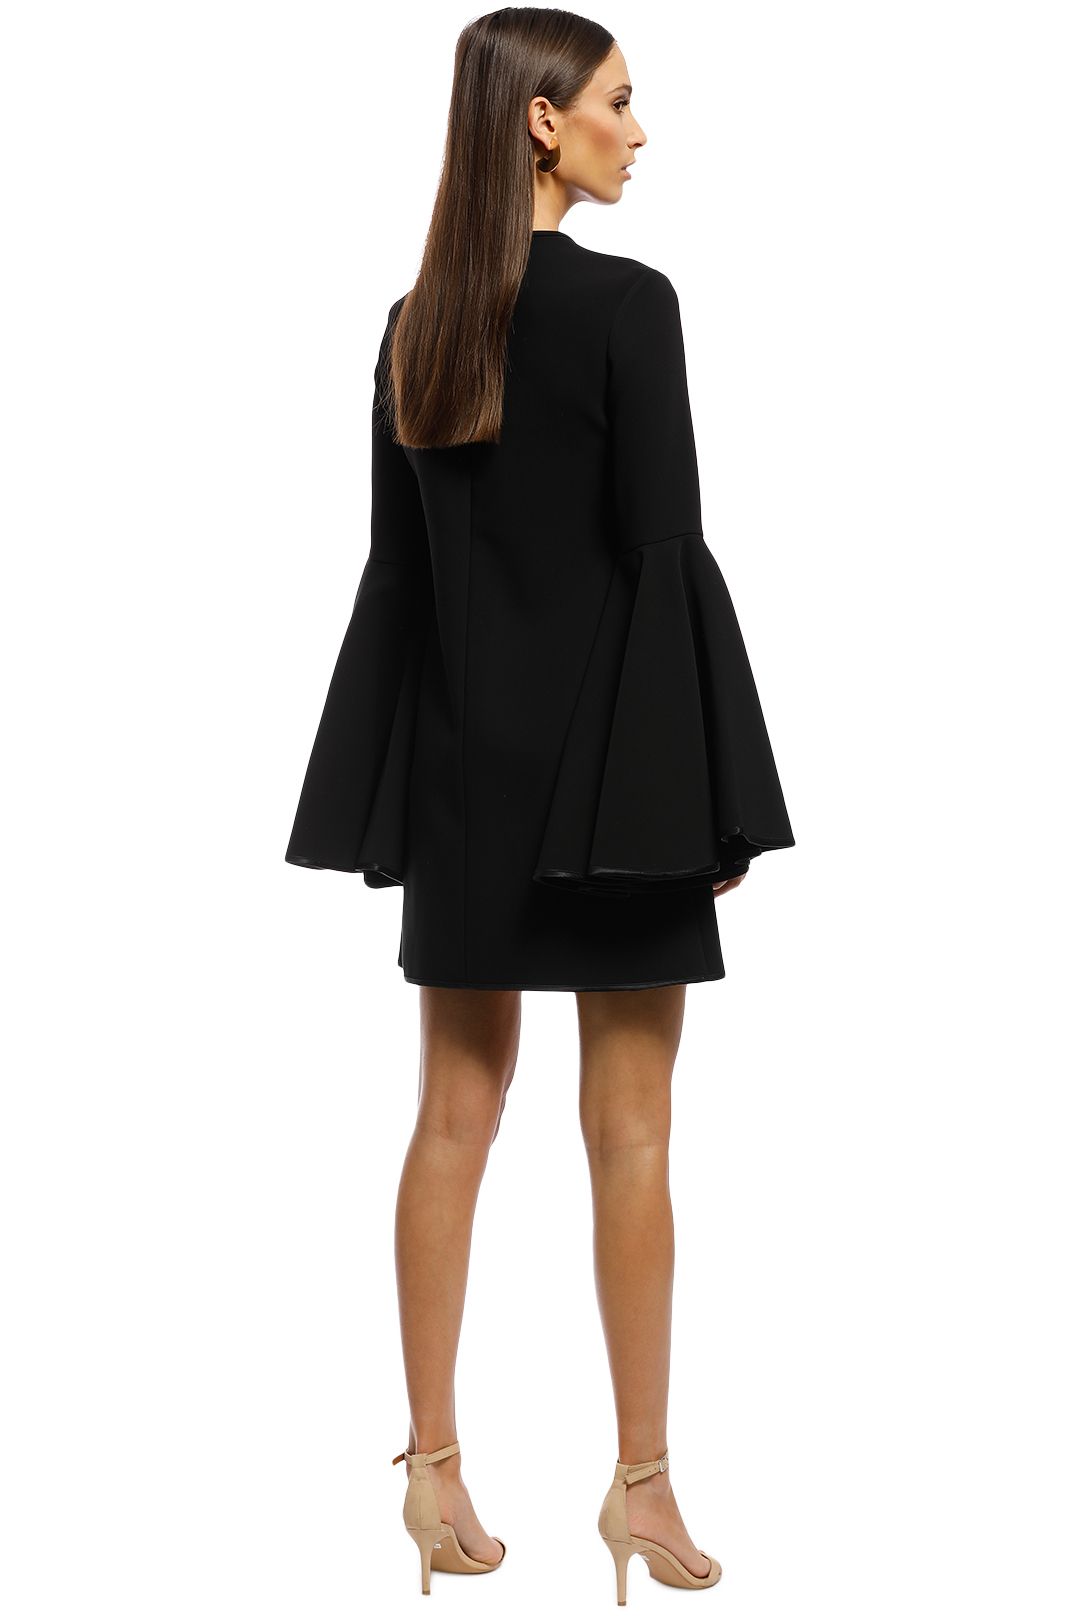 Ellery - Dogma Flare Sleeve Mini Dress - Black - Back